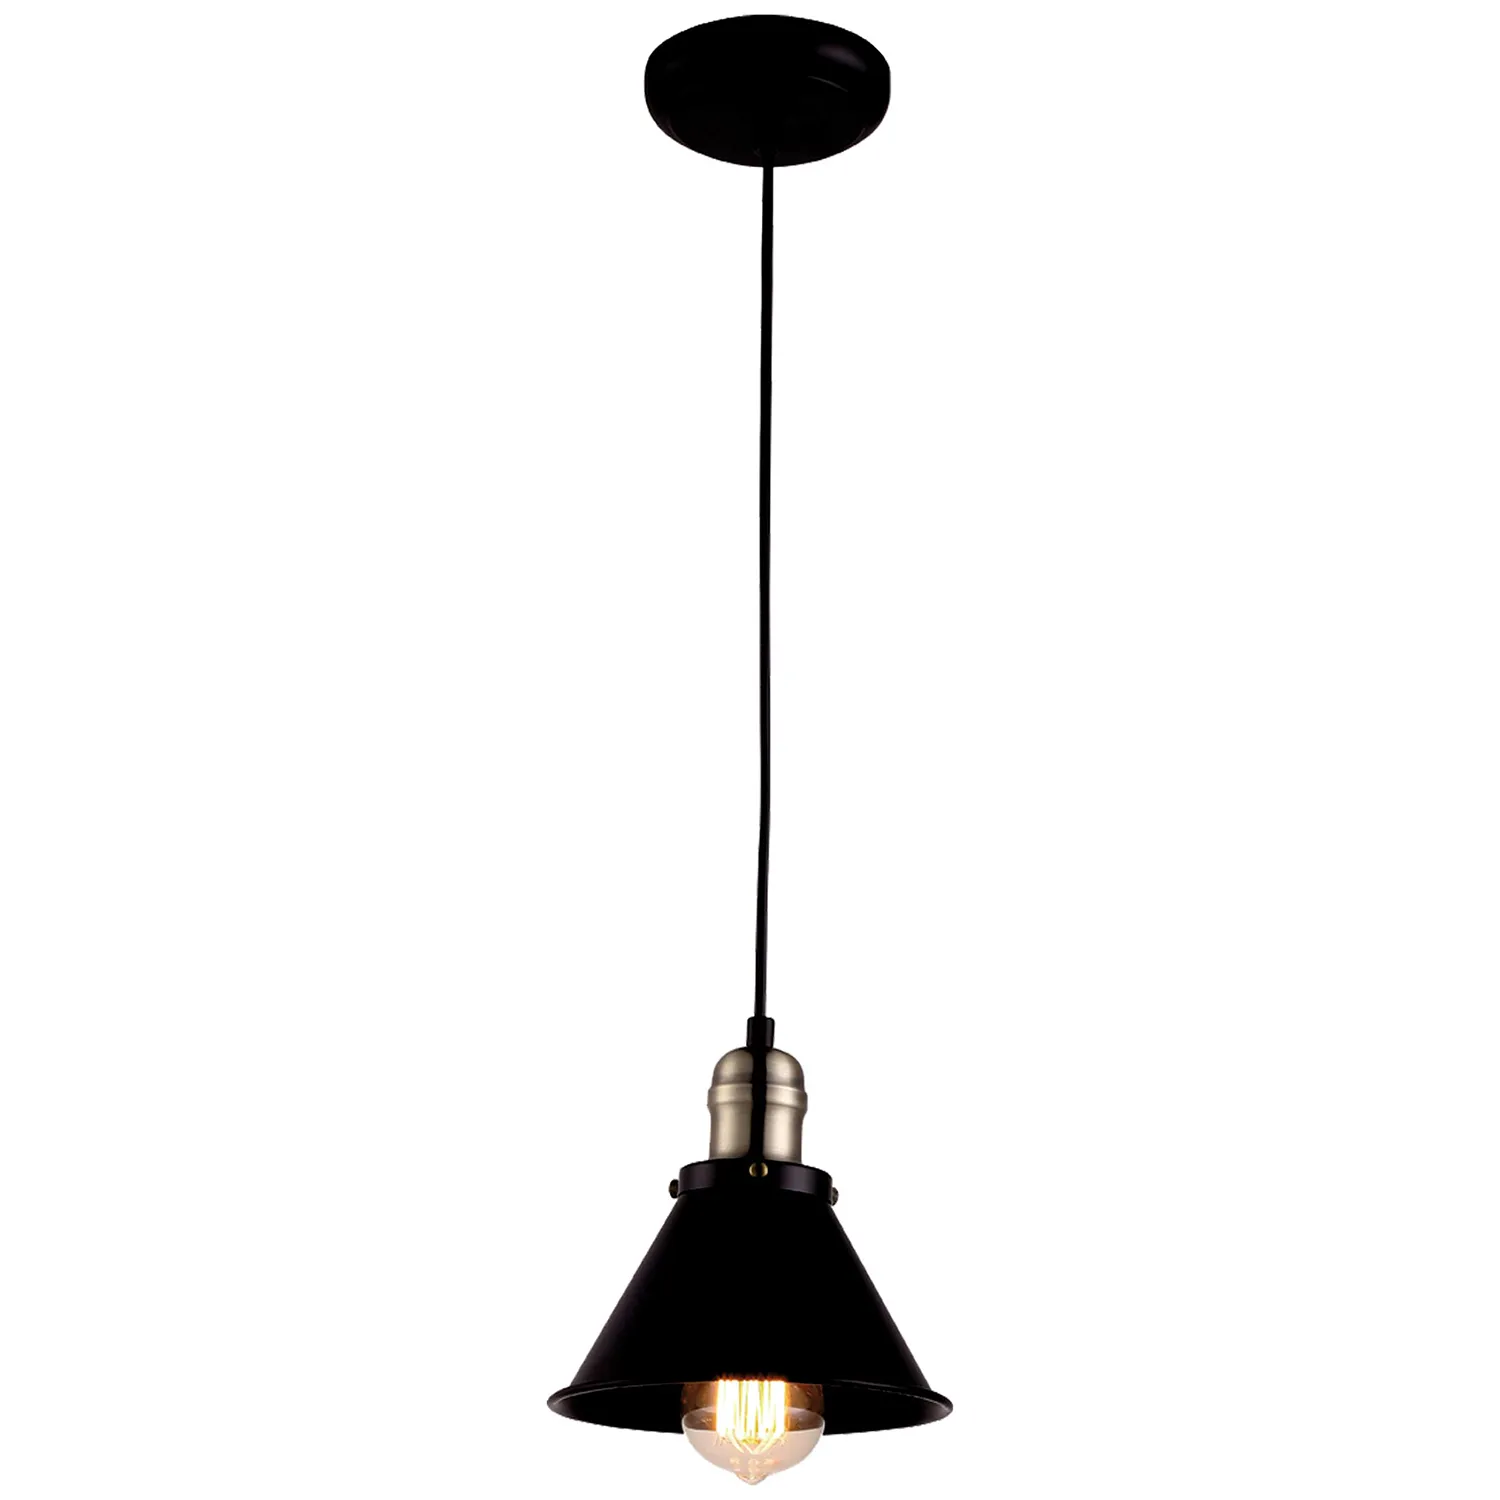 Lampa wisząca K-8038-1 z serii MORENO